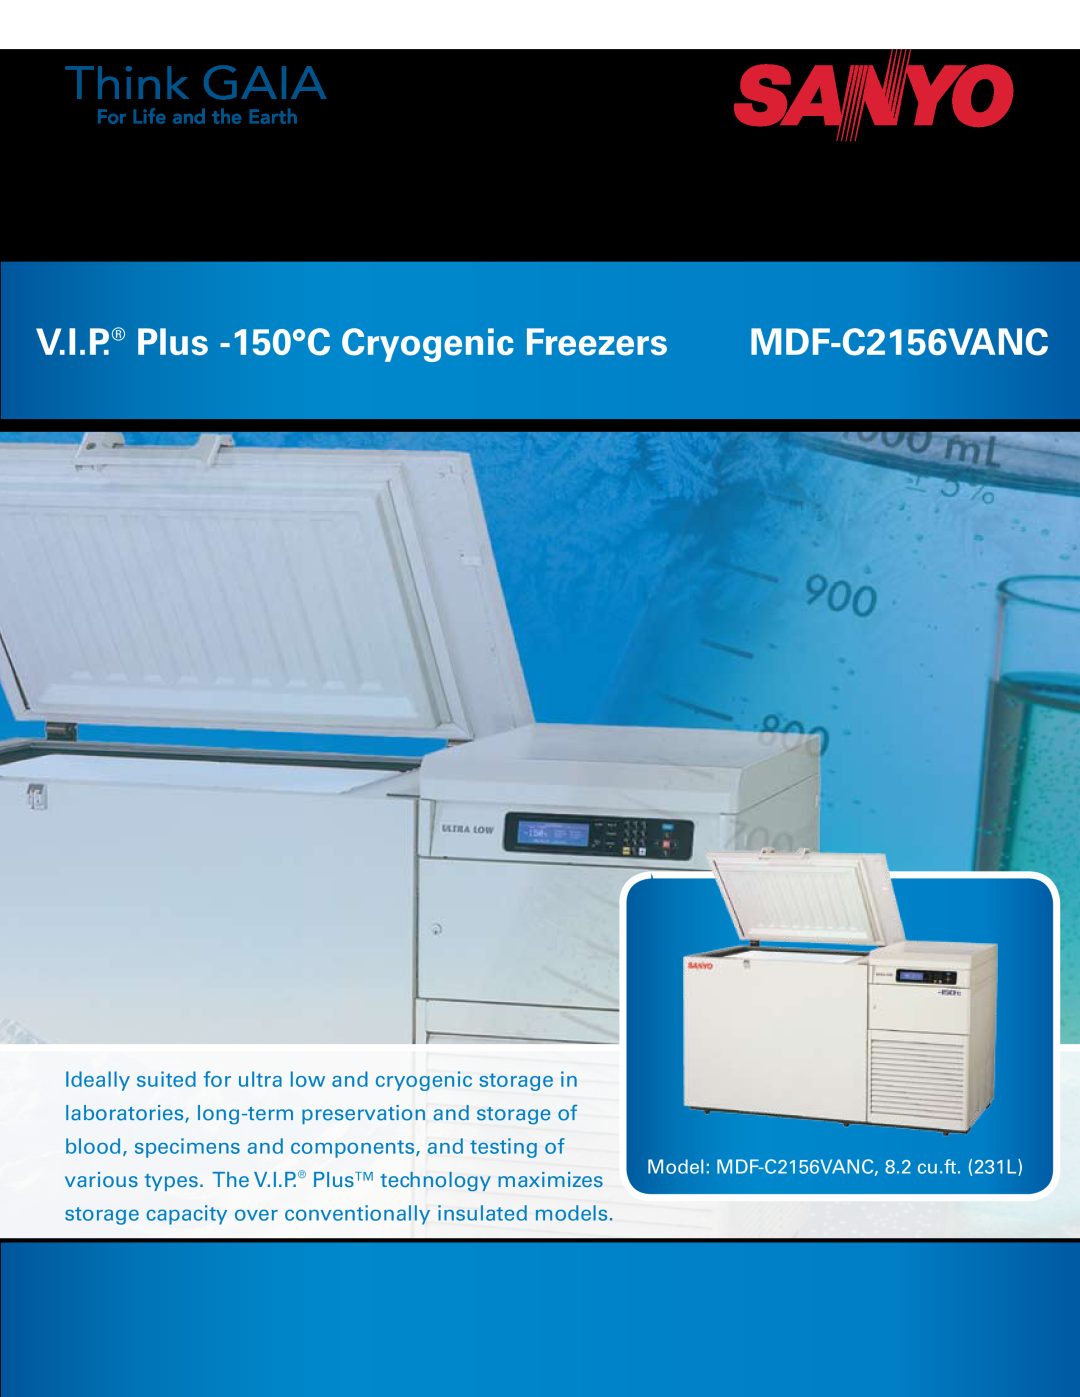 Sanyo MDF-C2156VANC manual V.I.P. Plus -150C Cryogenic Freezers 